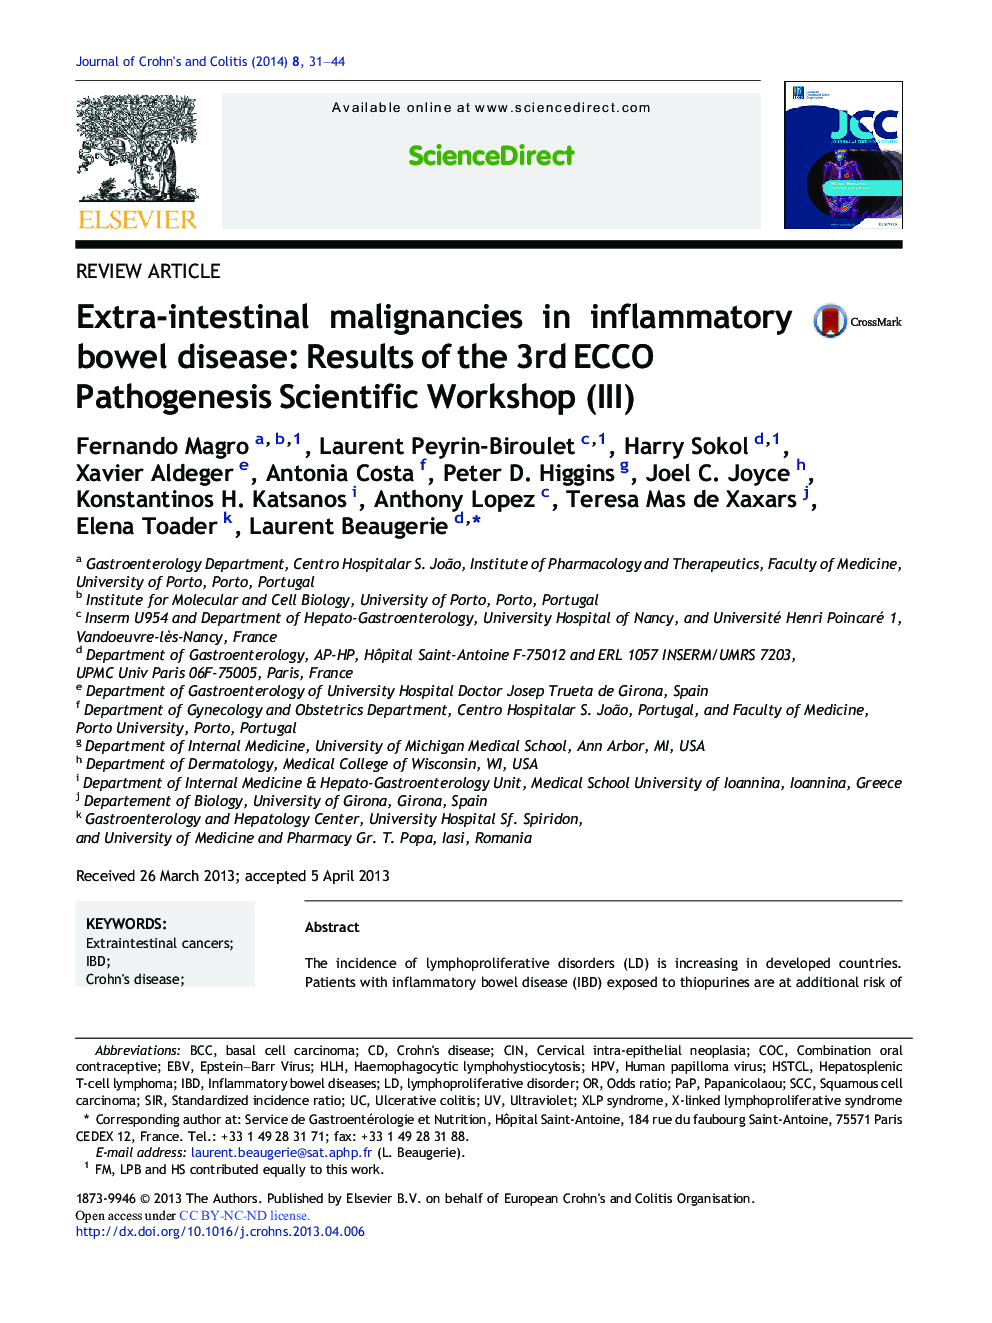 Review ArticleExtra-intestinal malignancies in inflammatory bowel disease: Results of the 3rd ECCO Pathogenesis Scientific Workshop (III)